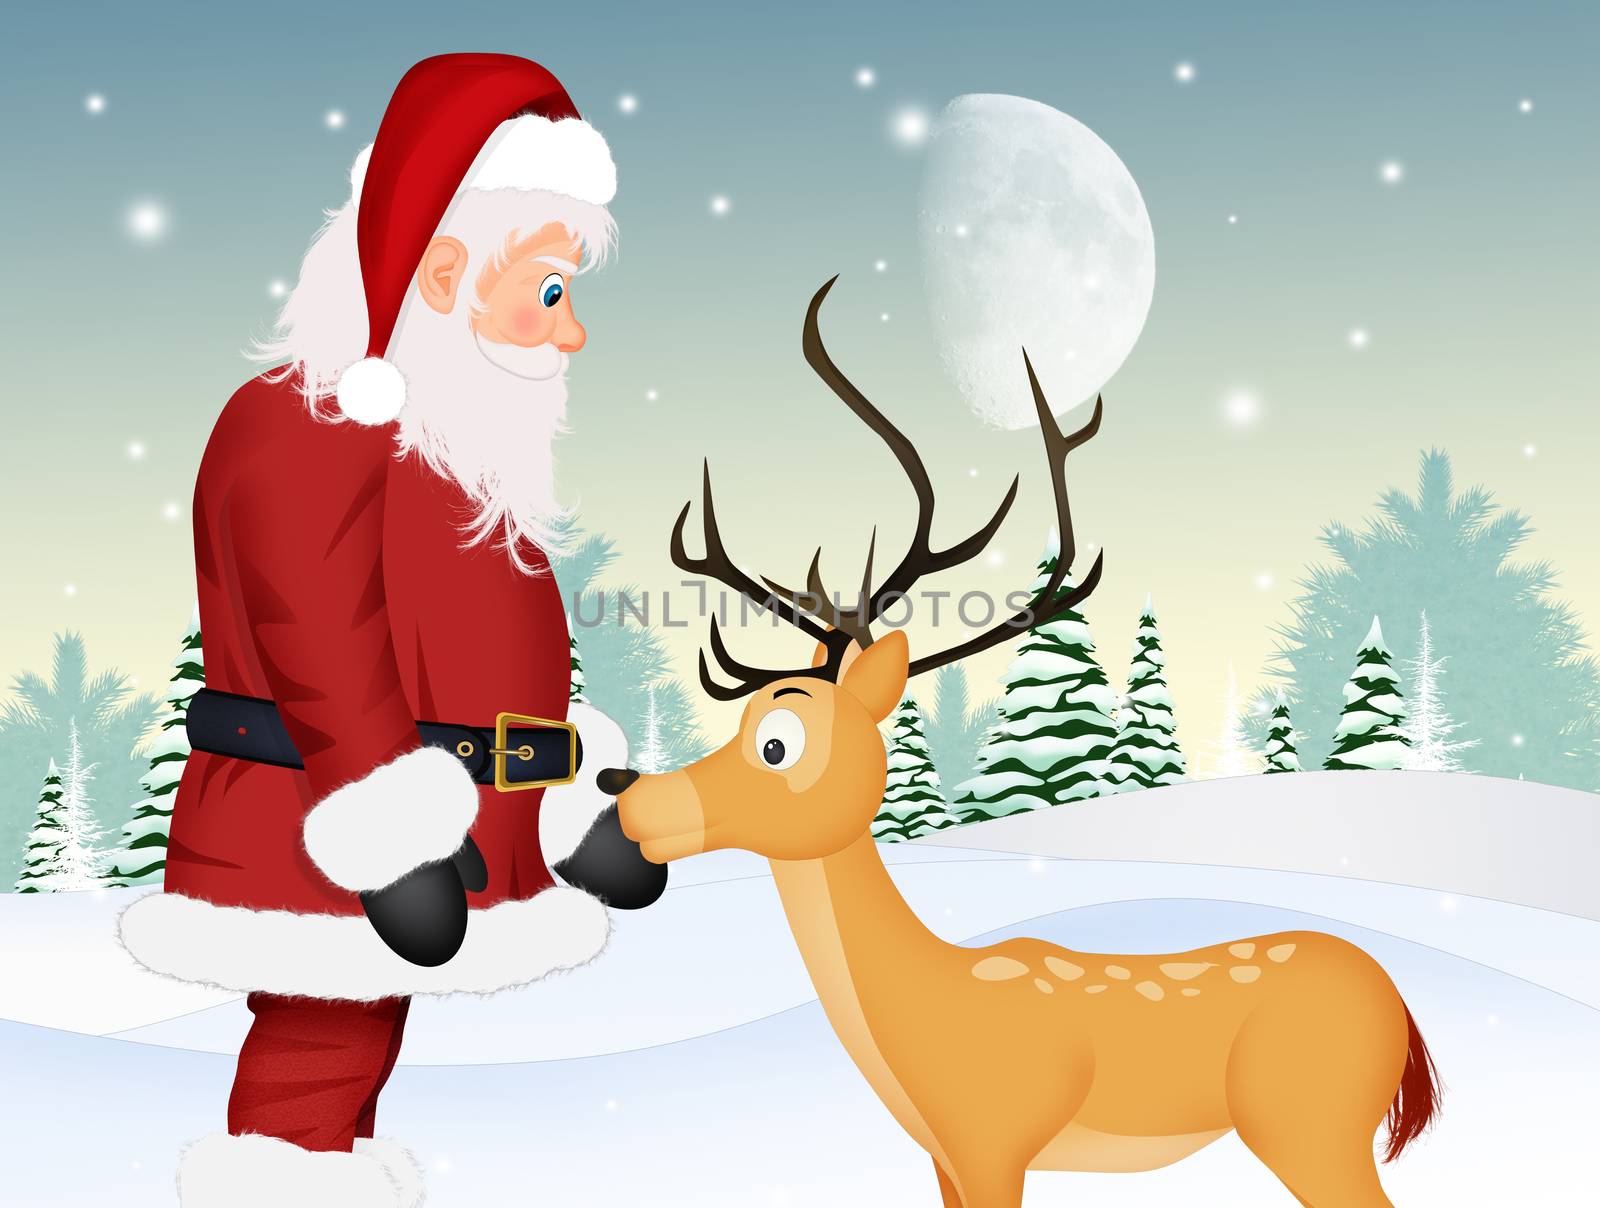 Santa Claus and reindeer by adrenalina